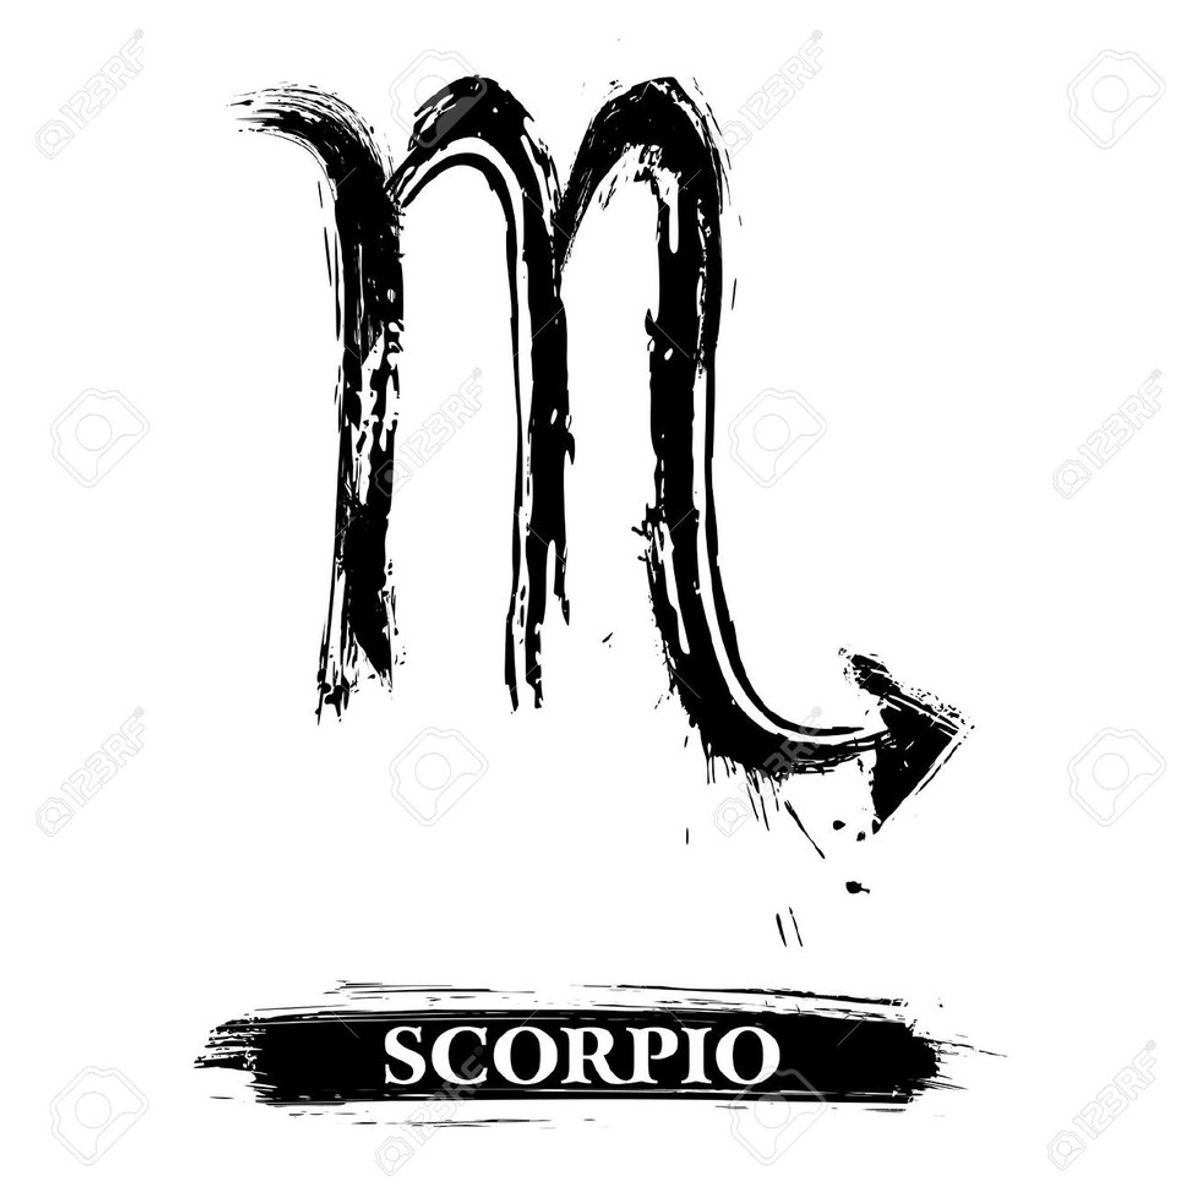 Being A Scorpio